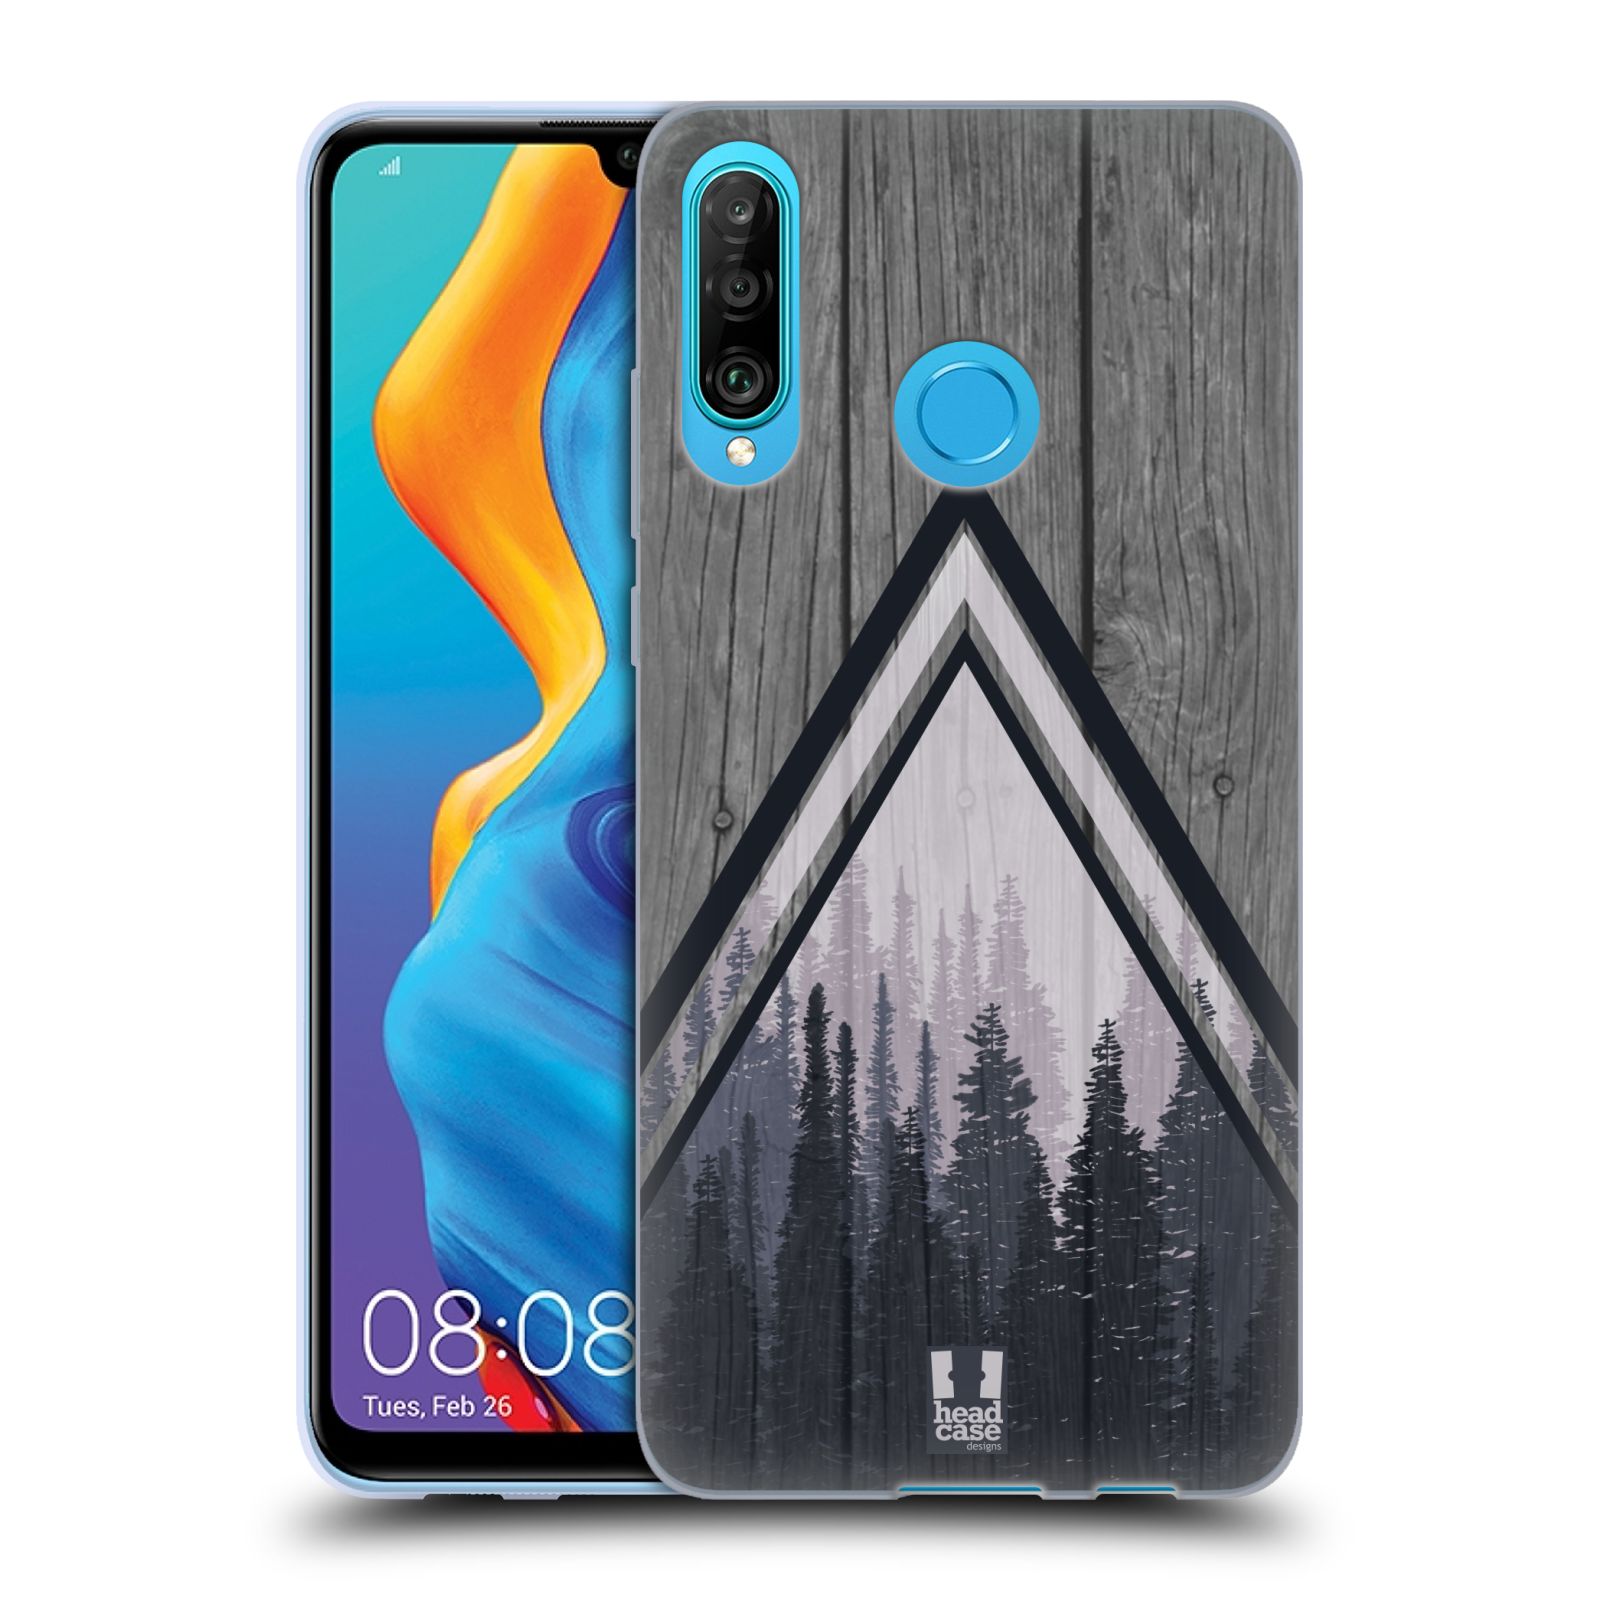 Silikonové pouzdro na mobil Huawei P30 Lite - Head Case - Dřevo a temný les (Silikonový kryt, obal, pouzdro na mobilní telefon Huawei P30 Lite Dual Sim (MAR-L01A, MAR-L21A, MAR-LX1A) s motivem Dřevo a temný les)